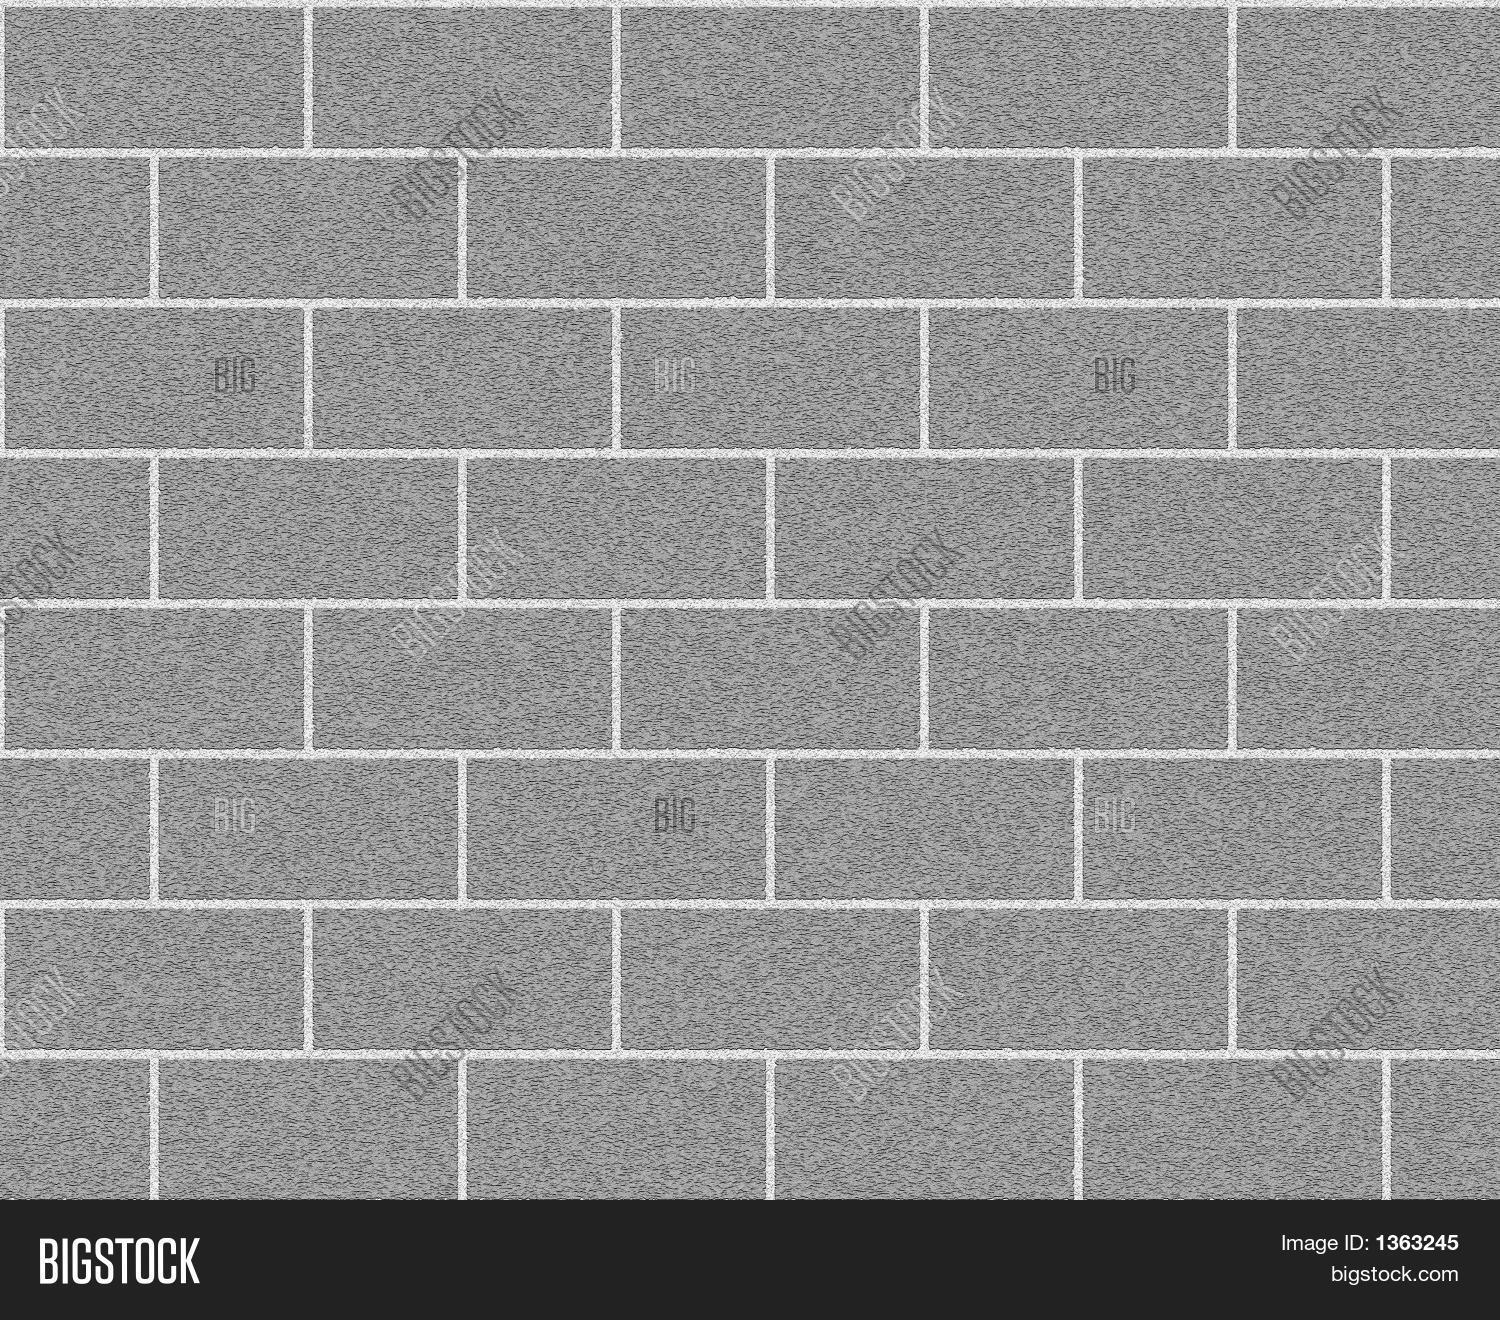 Concrete Block Background Image & Photo | Bigstock